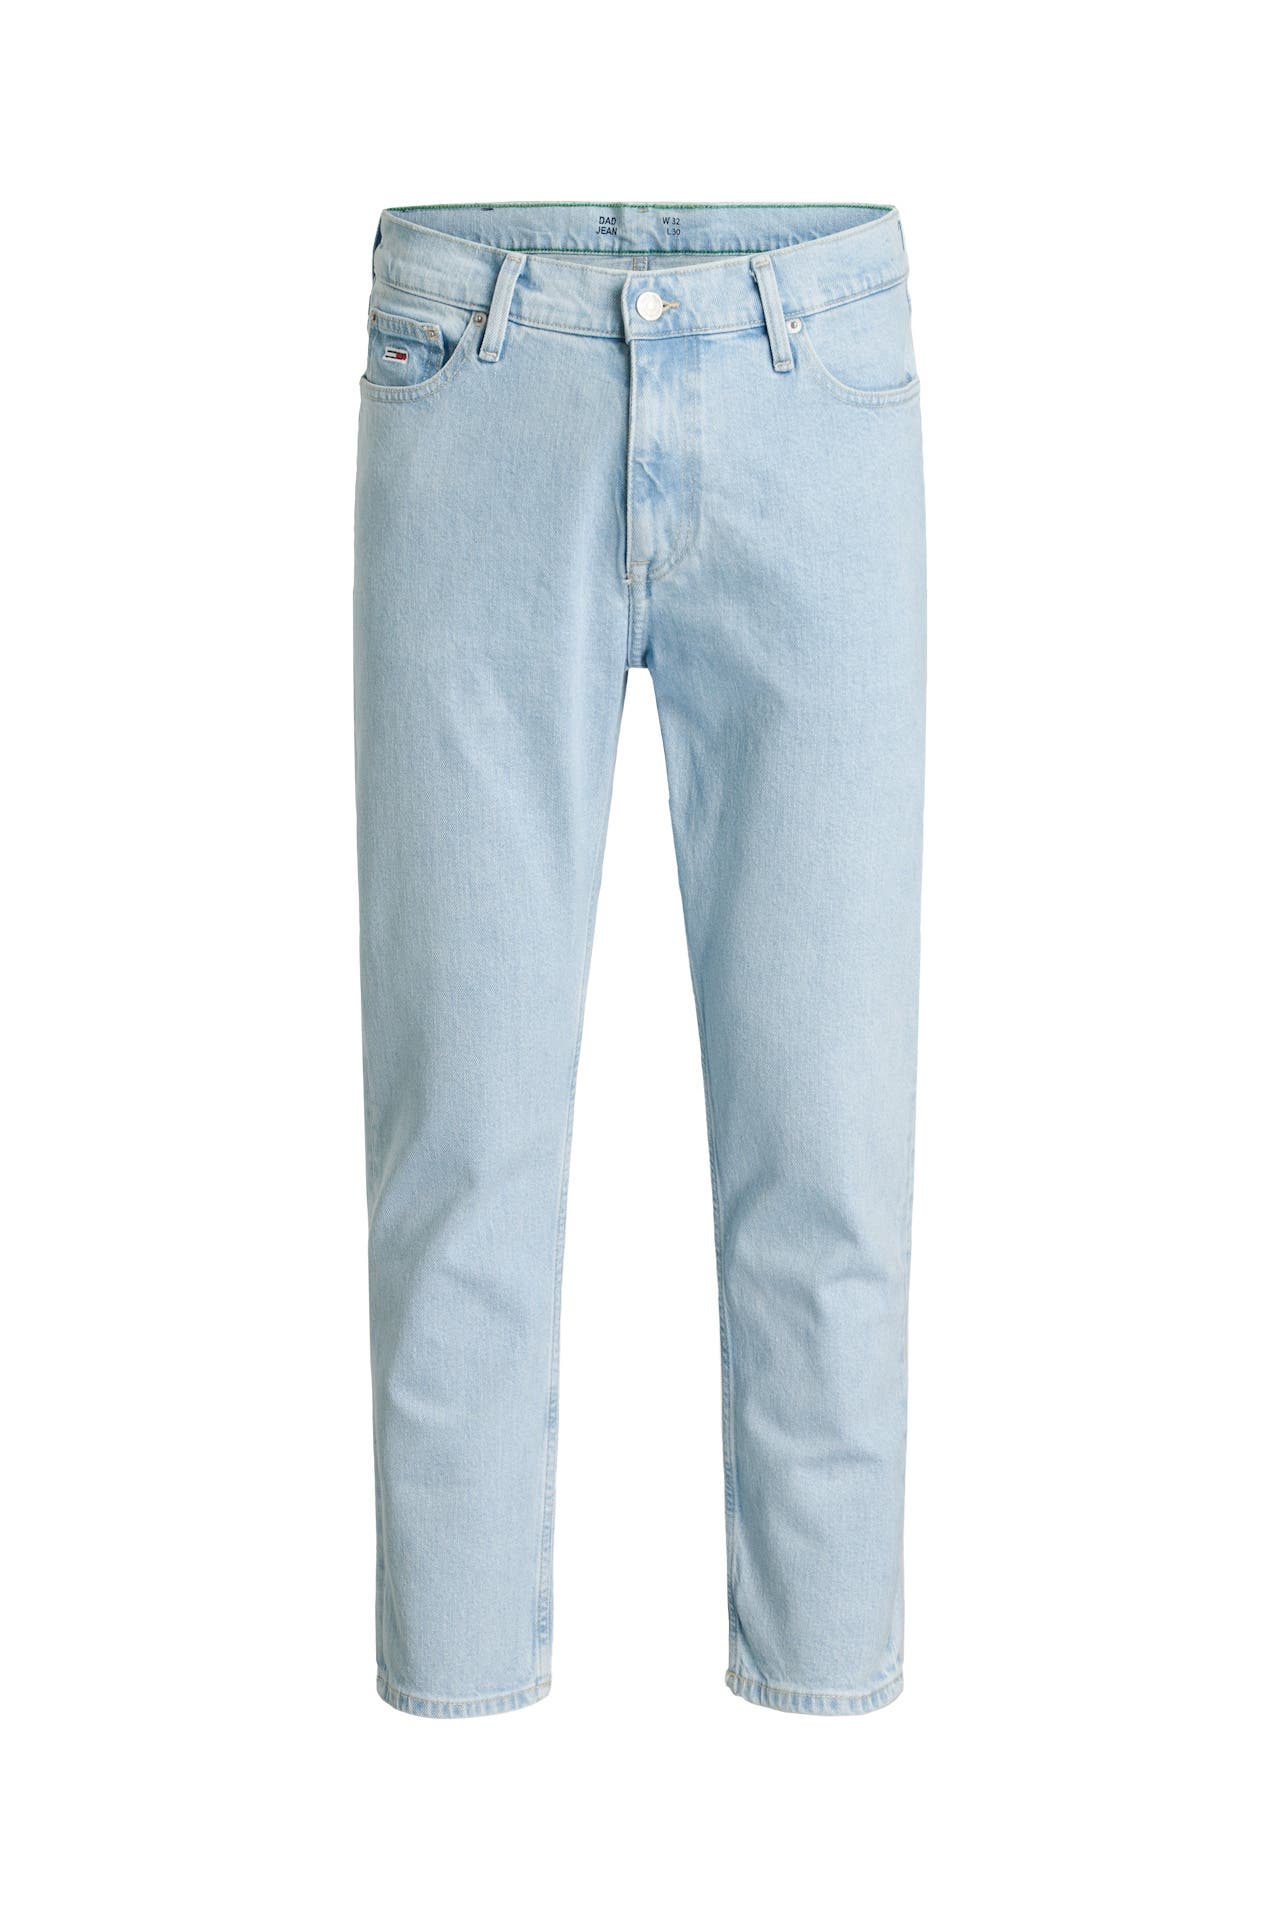 Masaccio komedie Zuiver Jeans hellblau straight - TOMMY JEANS » günstig online kaufen |  OUTLETCITY.COM